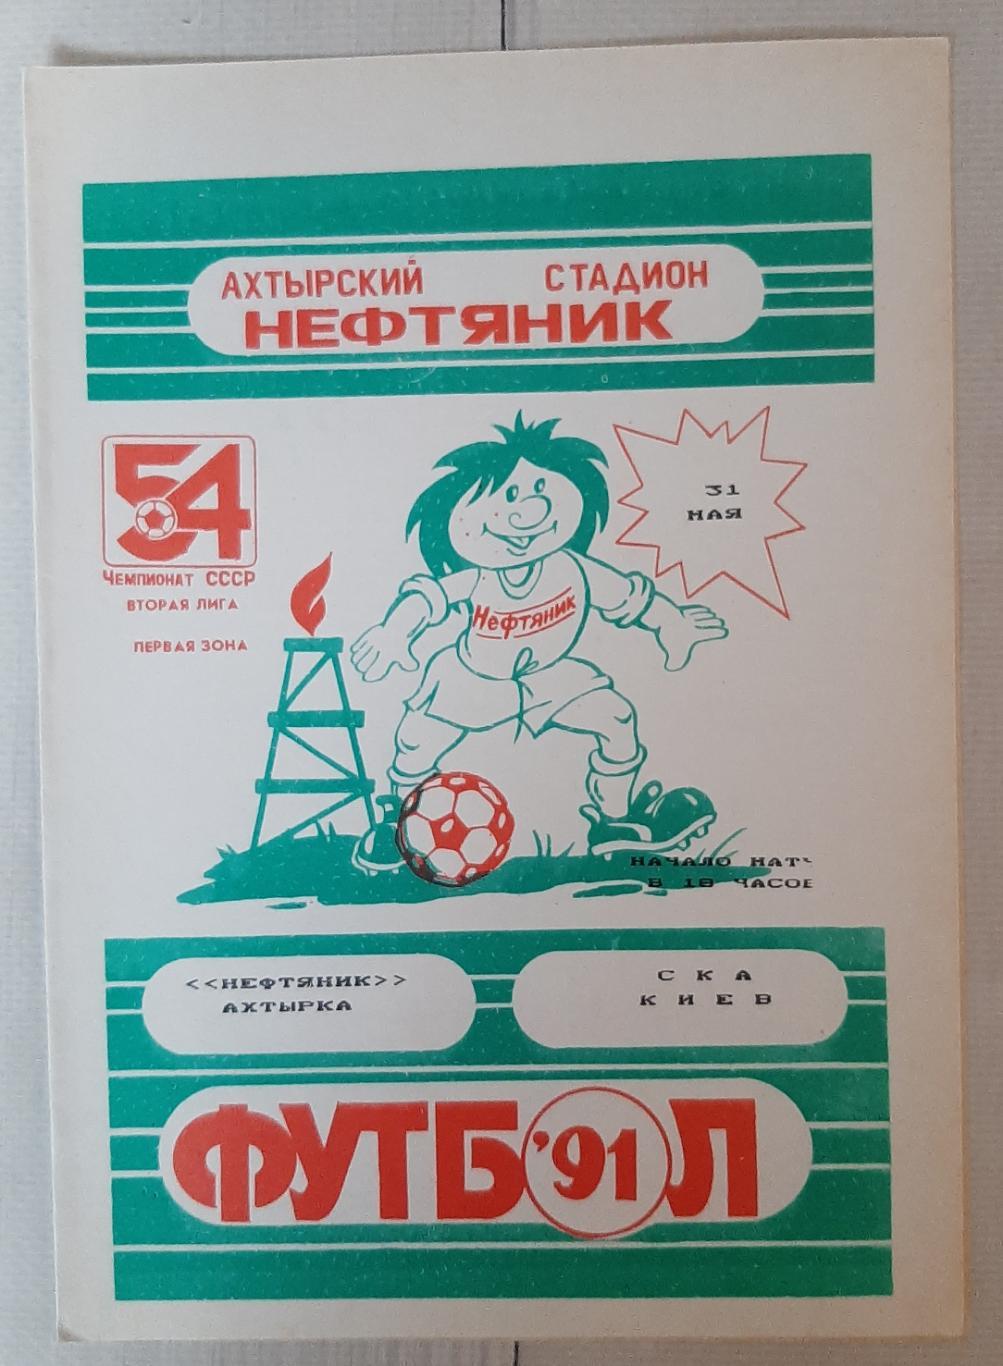 Нафтовик Охтирка - СКА Київ 31.05.1991